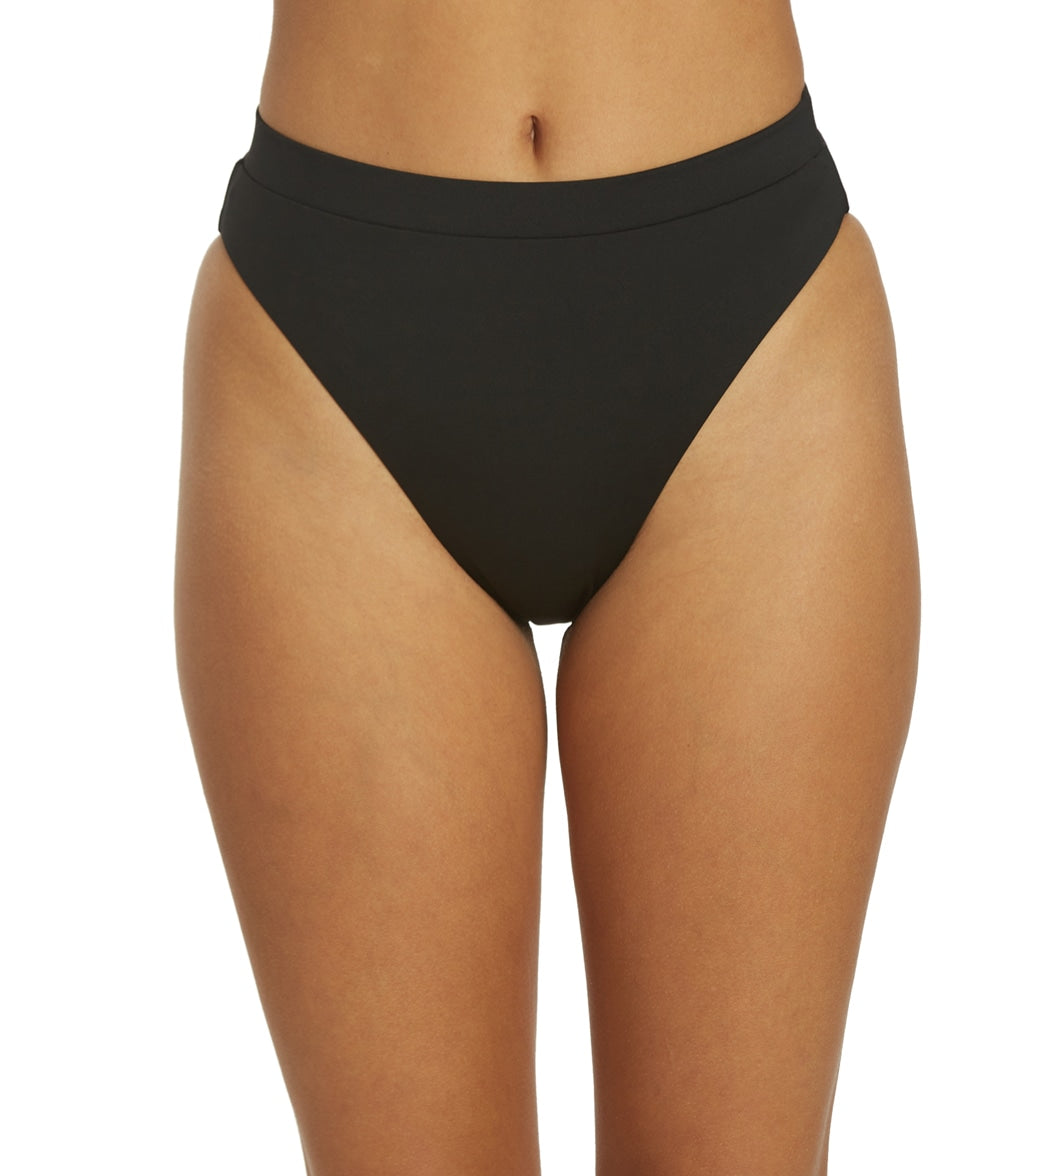 Nike Women's Essential High Waisted Bikini Bottom at